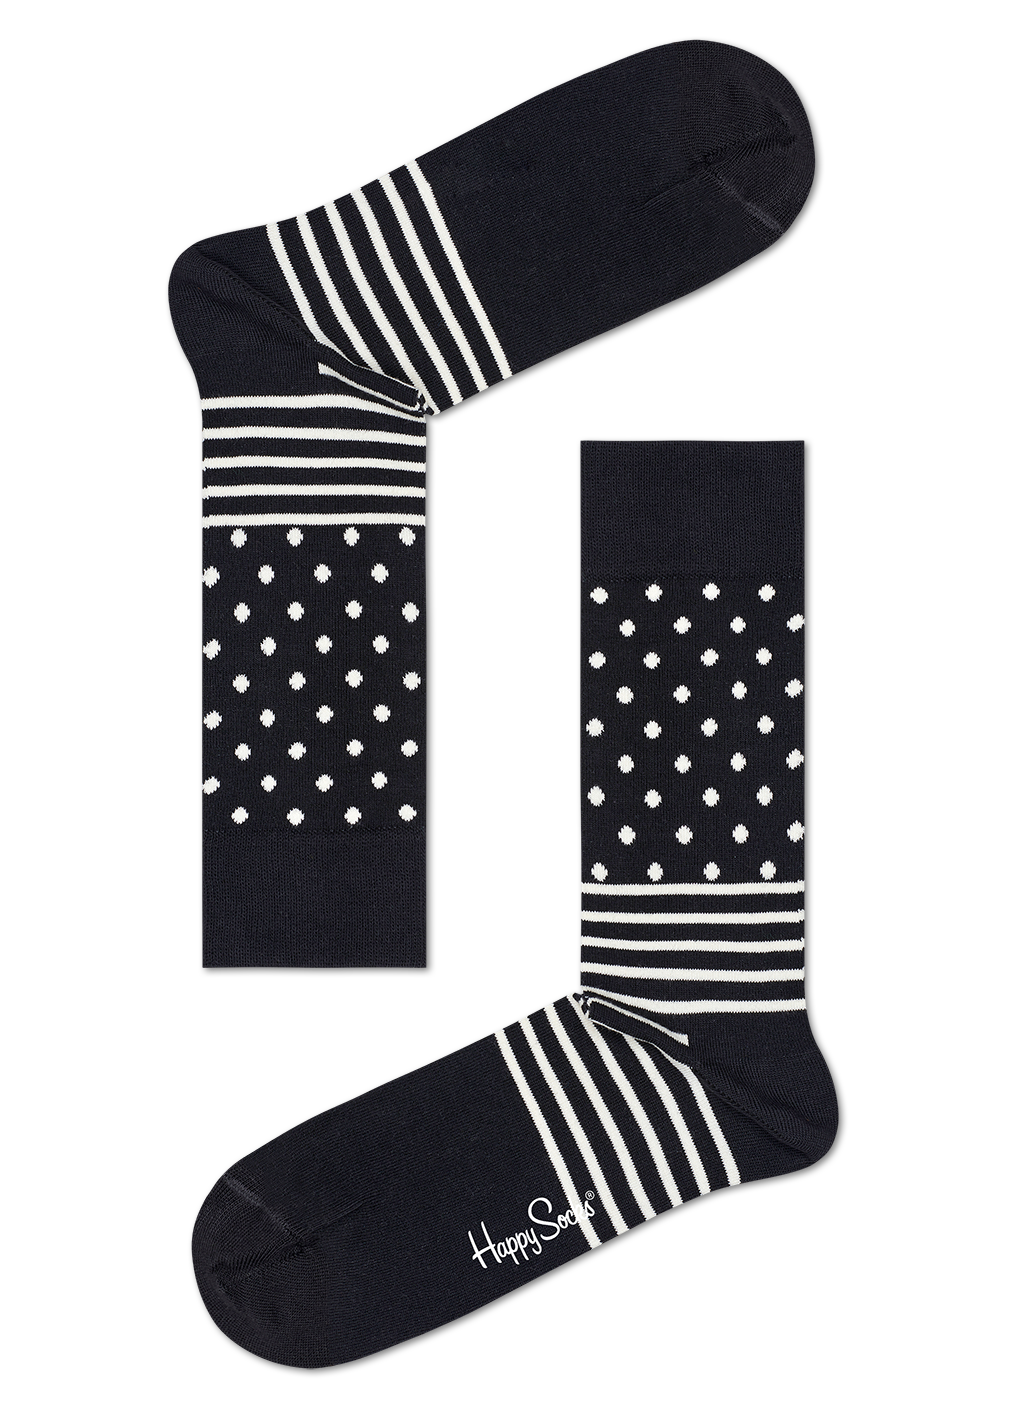 Black 4-Pack Classic Balck & Socks White US Socks Gift Crew Happy Set 